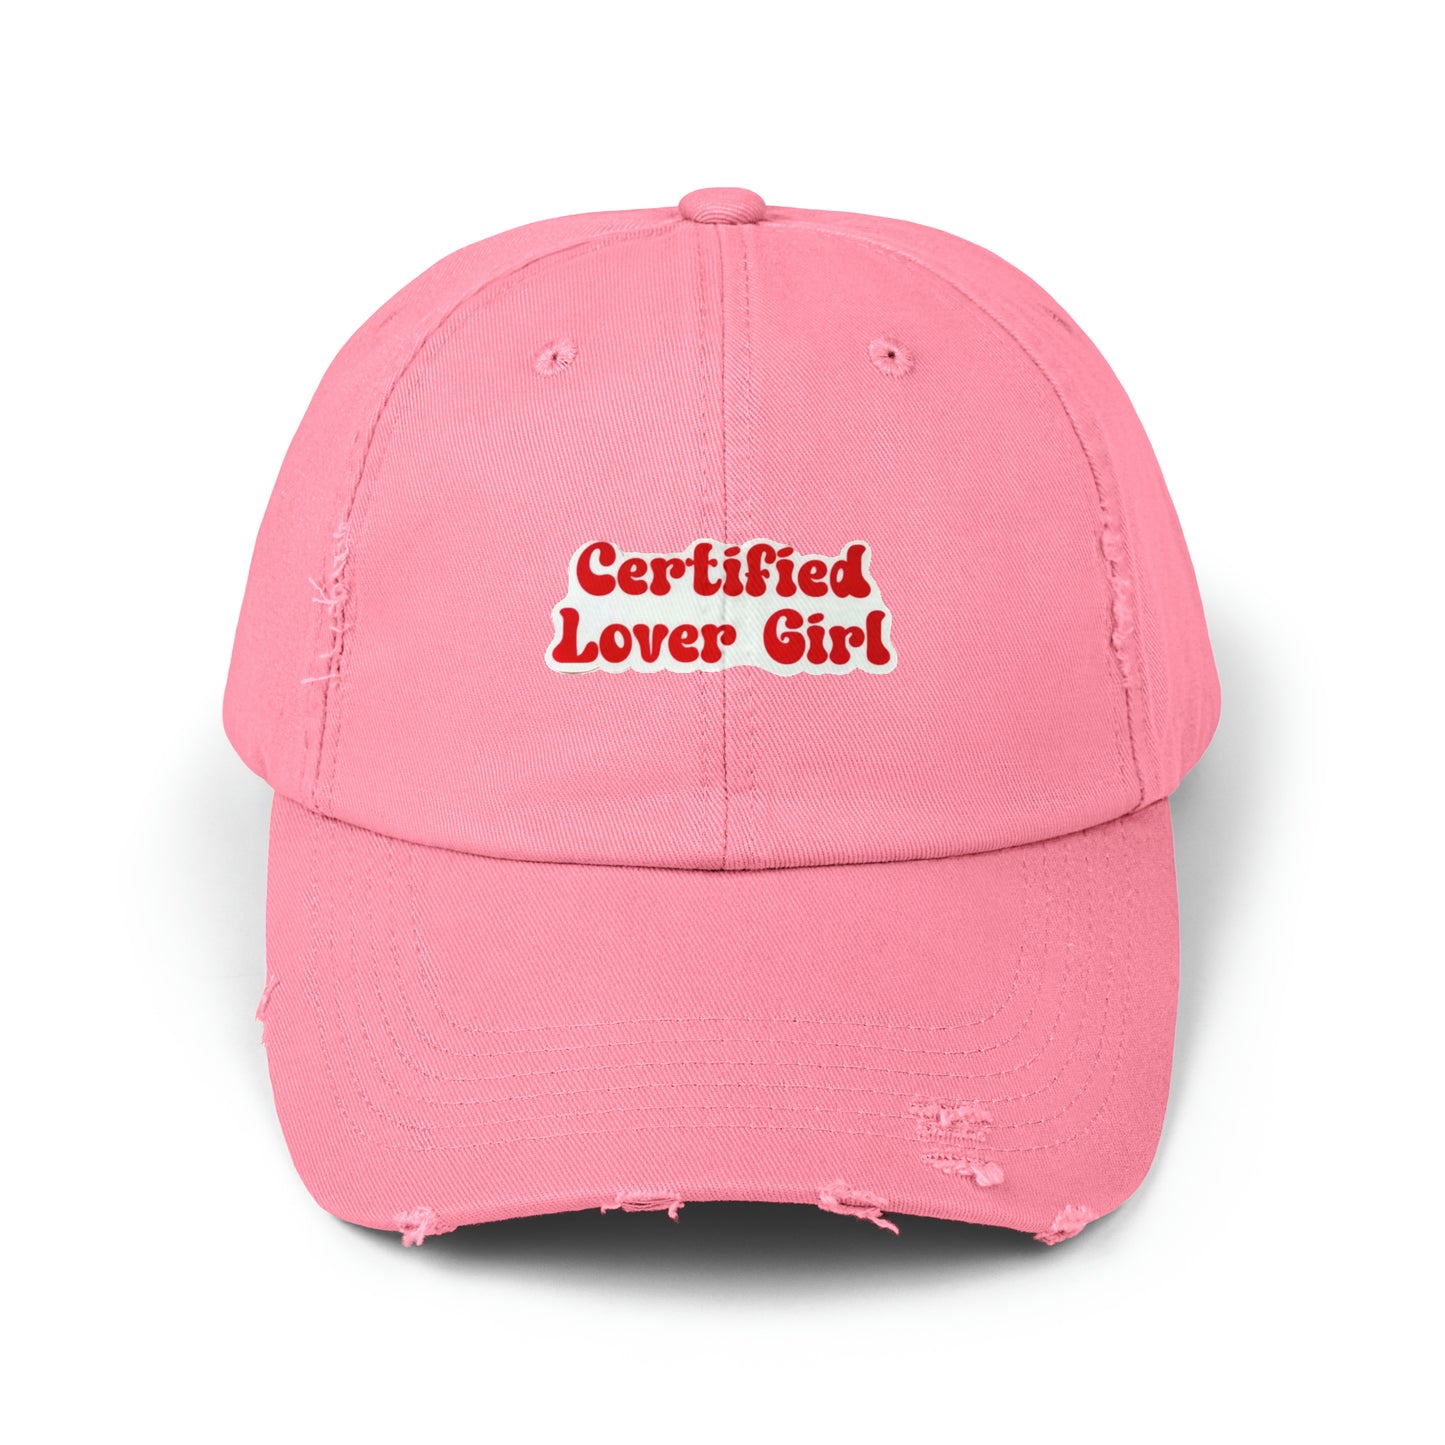 Certified Lover Girl, Drake inspired Unisex Distressed Cap